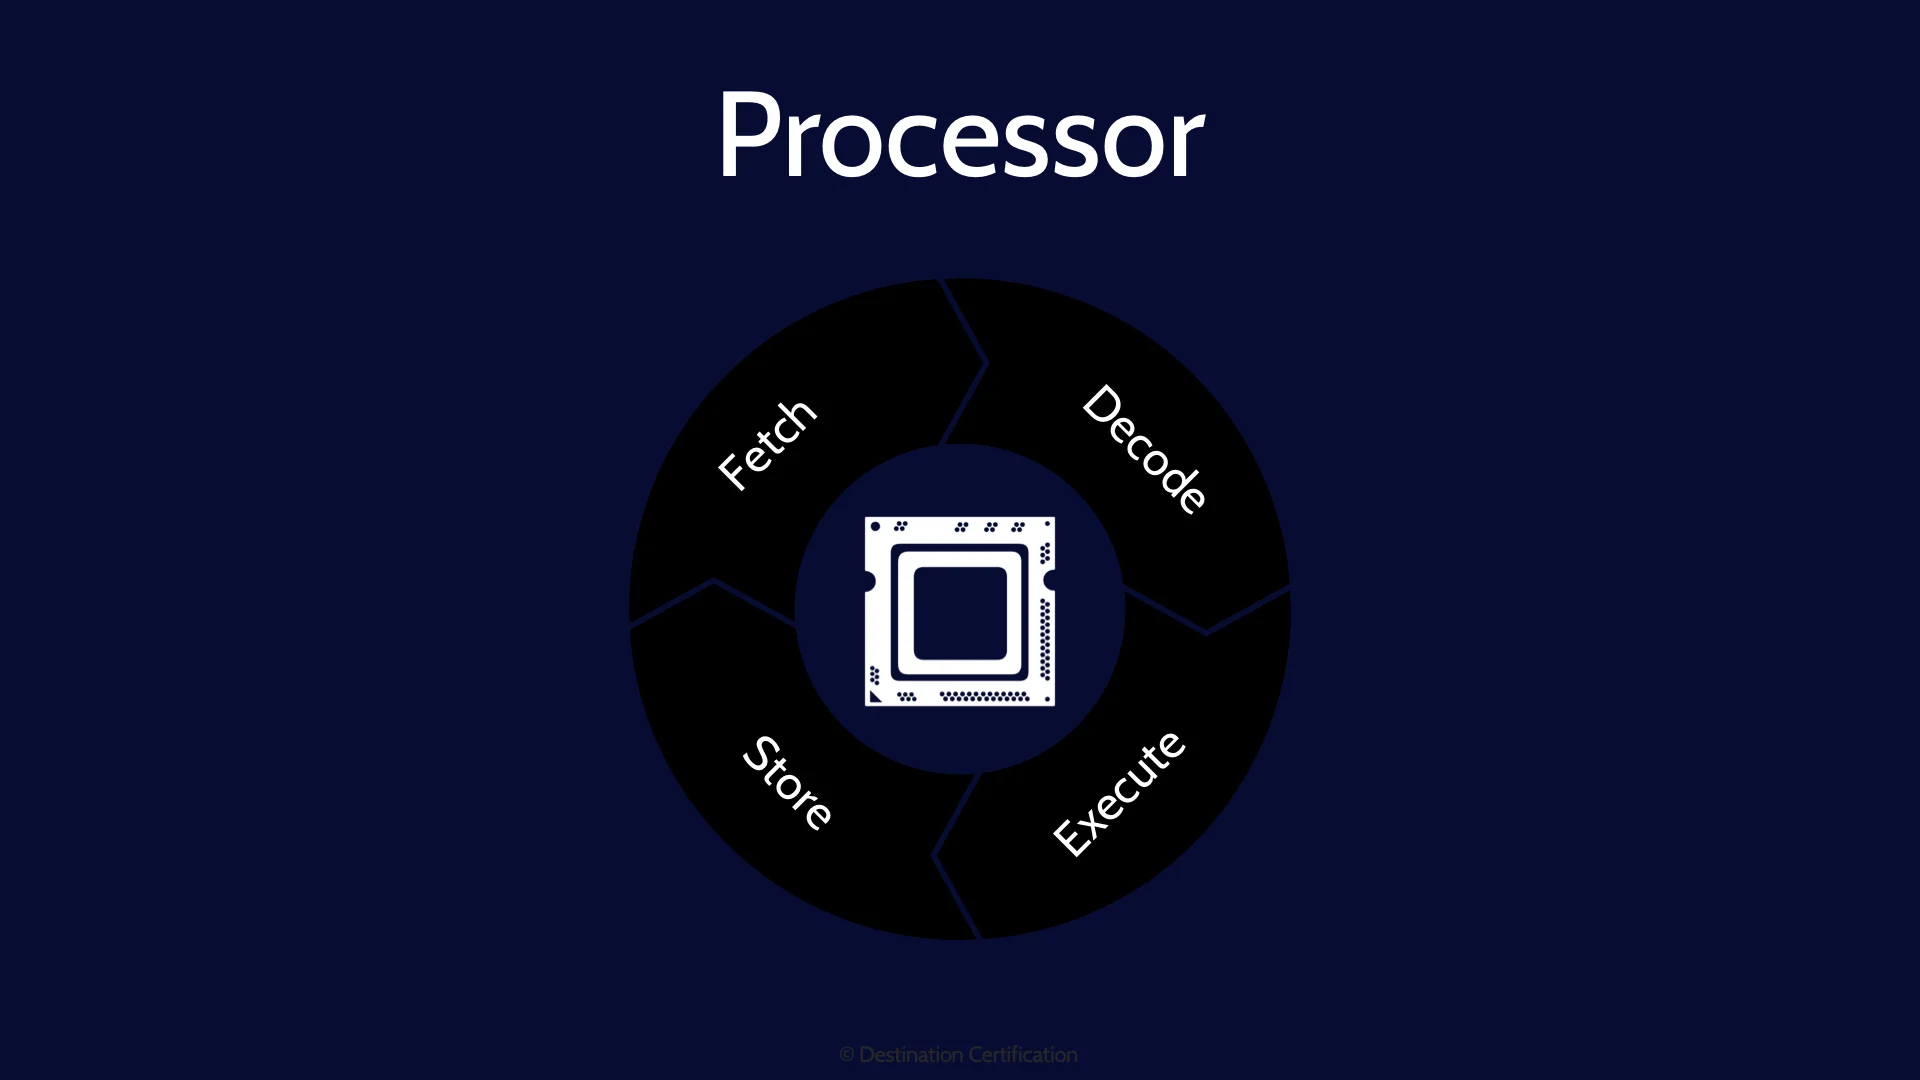 Image of a processor - Destination Certification